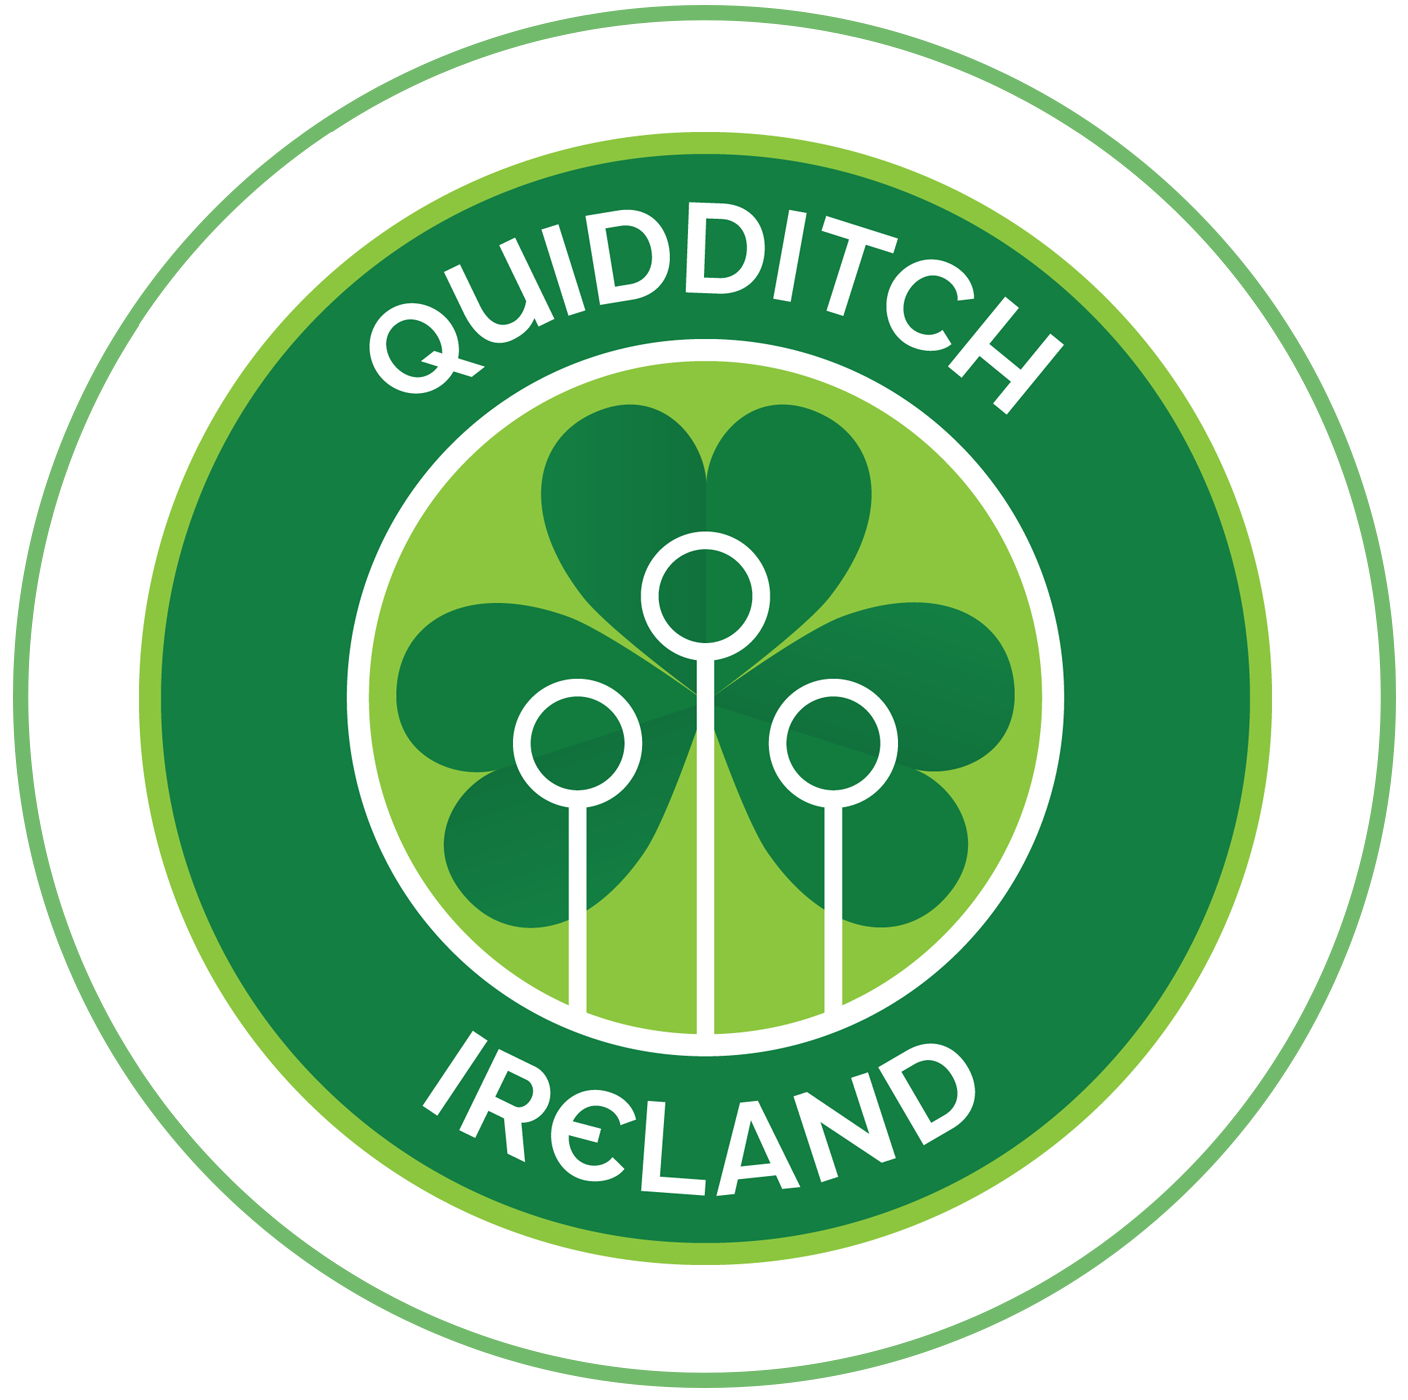 Quadball Ireland logo